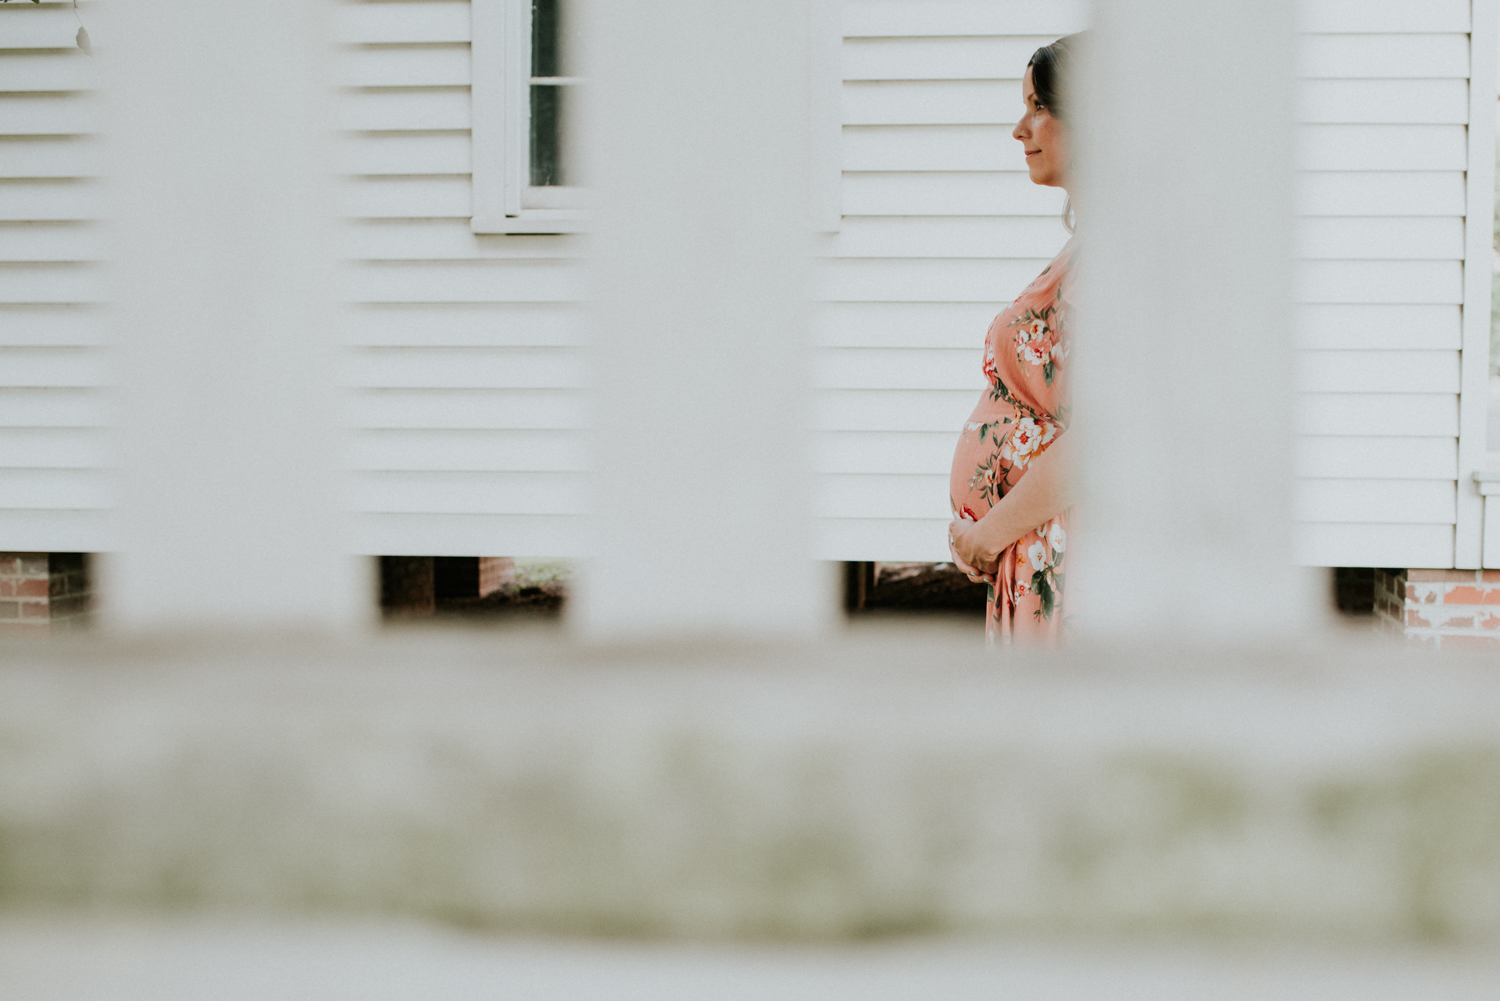 maternitysession-theclevelands-babybump-mommytobe-pregnancypictures-maternitysessions-houstontexas-texas-dowtownhouston-loscastrophotography-19.jpg